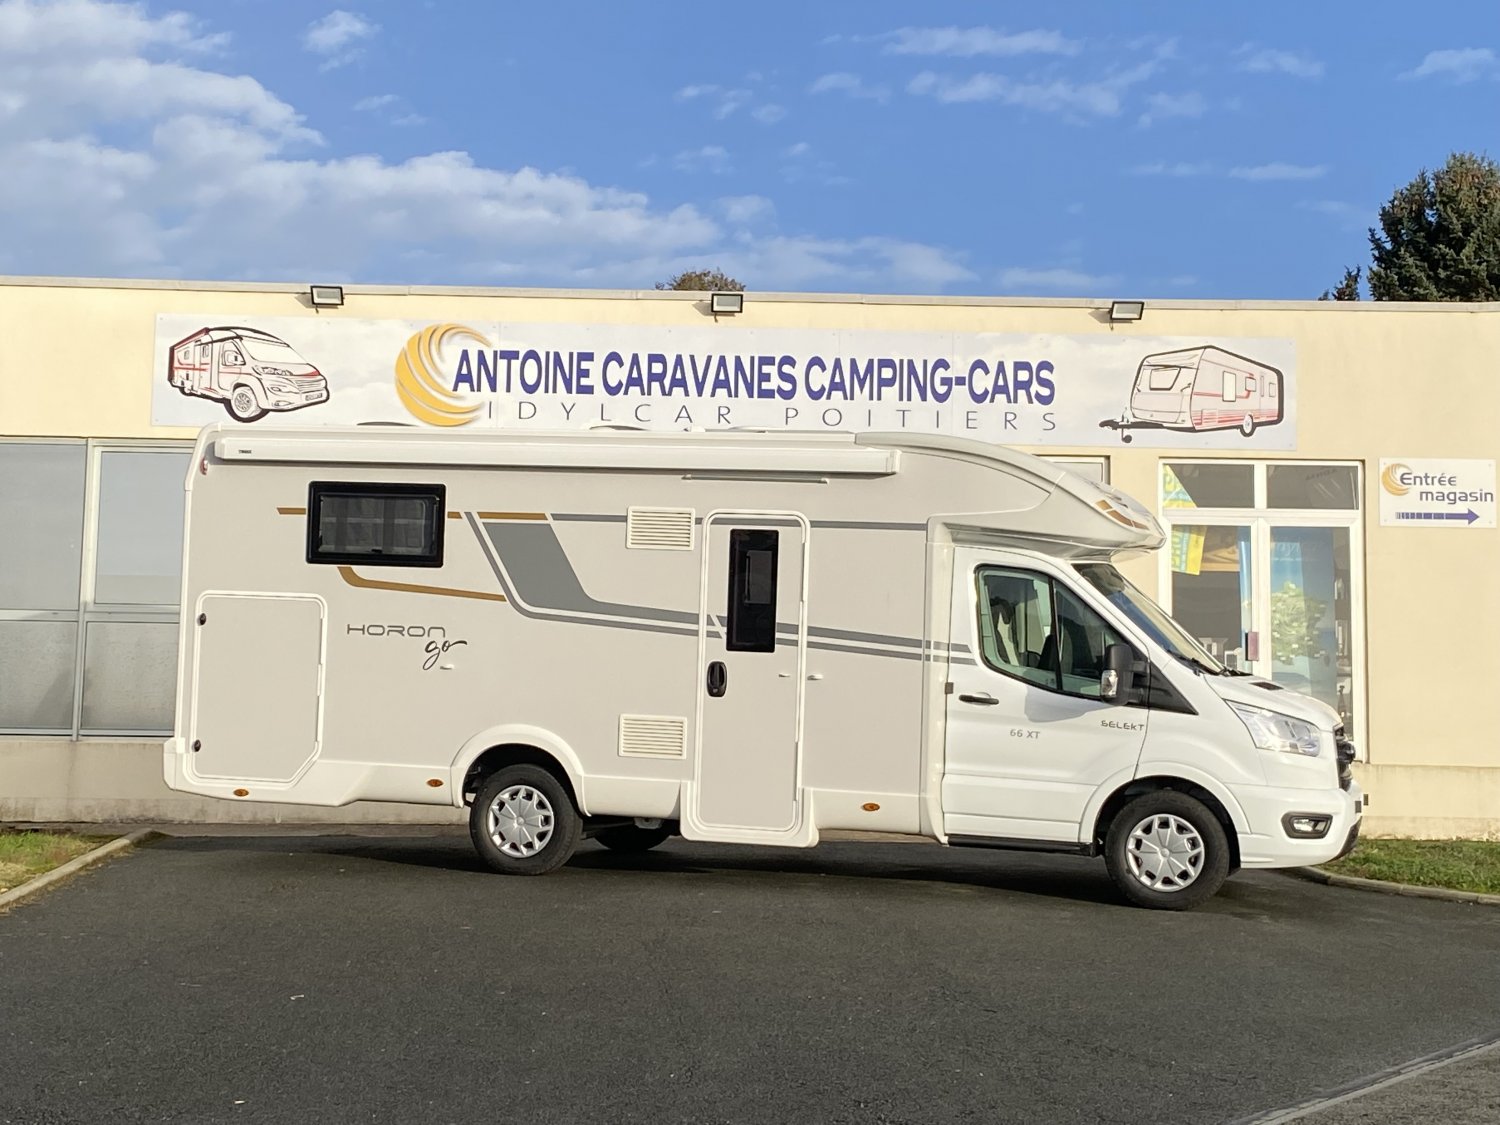 Antoine Caravanes et Camping Car - C.I. Horon GO 66 XT à 73 140€